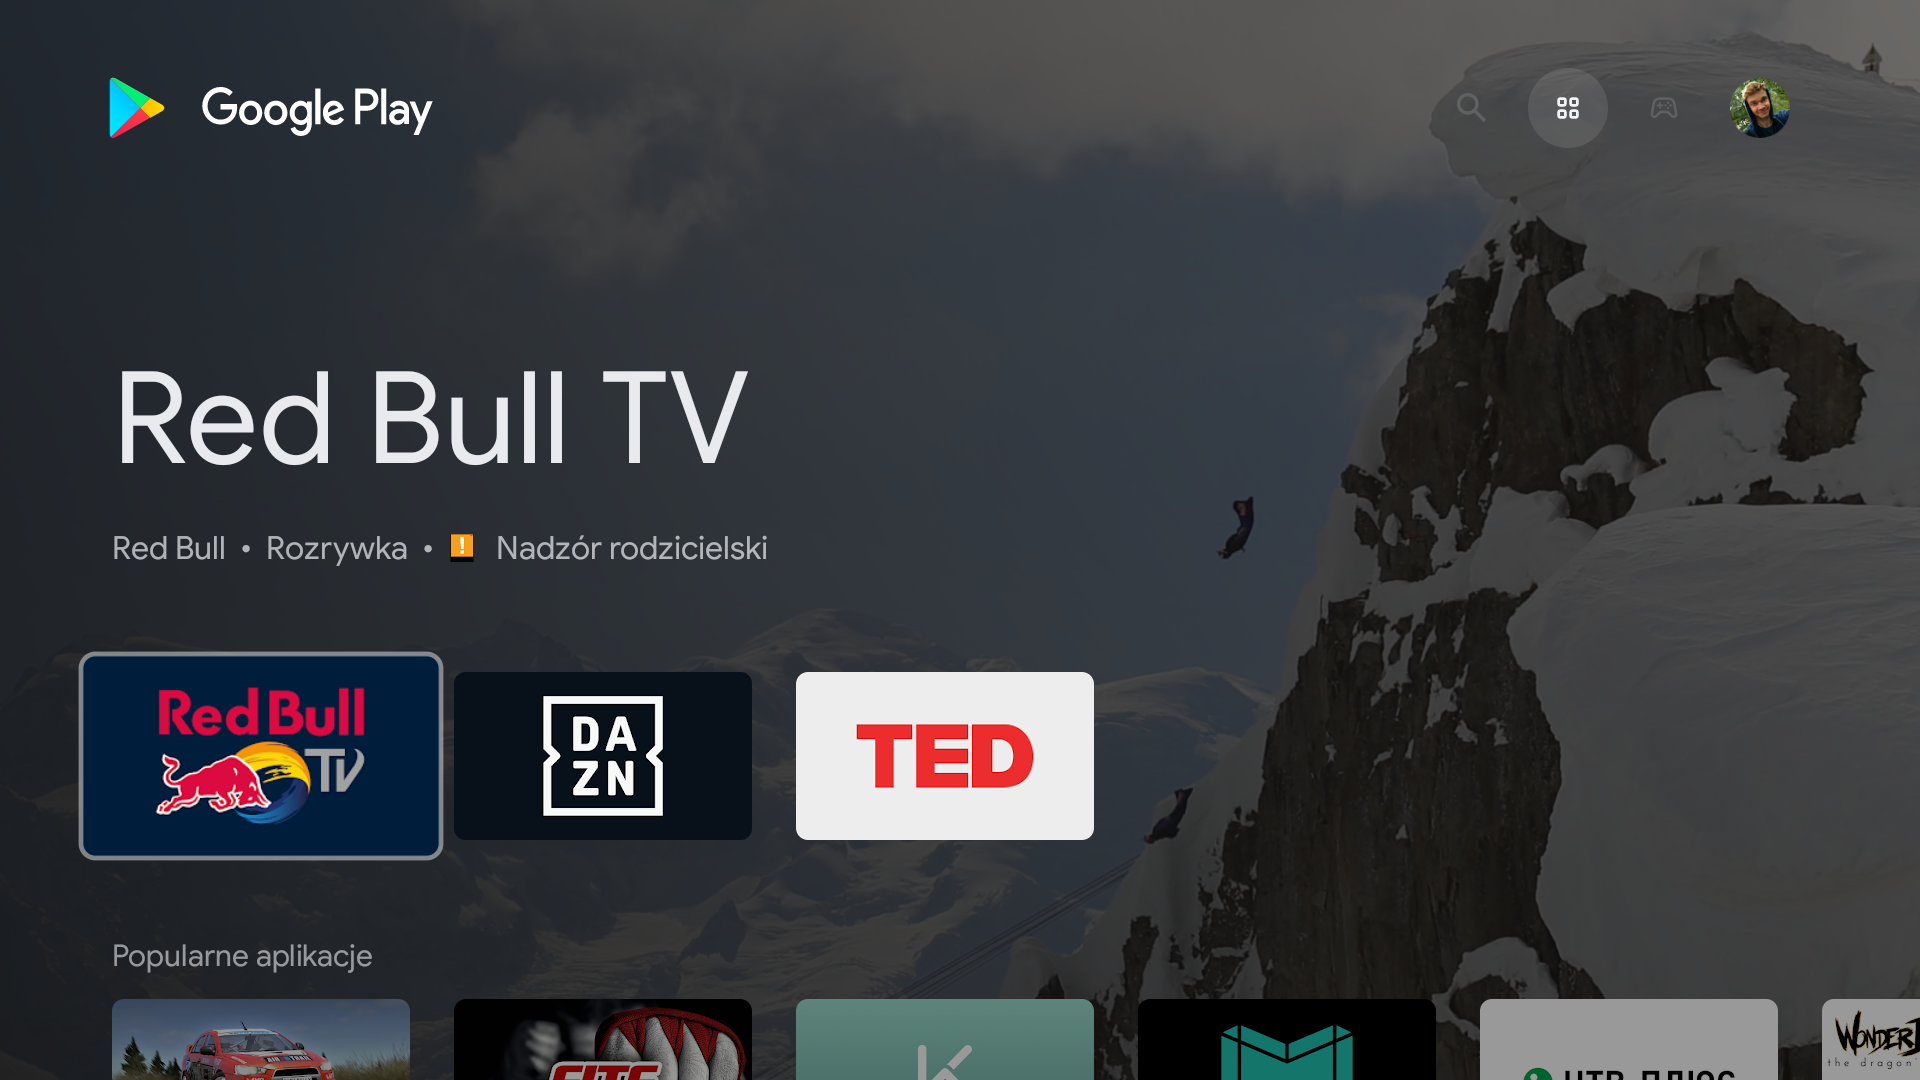 Xiaomi Mi LED TV P1 / fot. Kacper Żarski (oiot.pl)